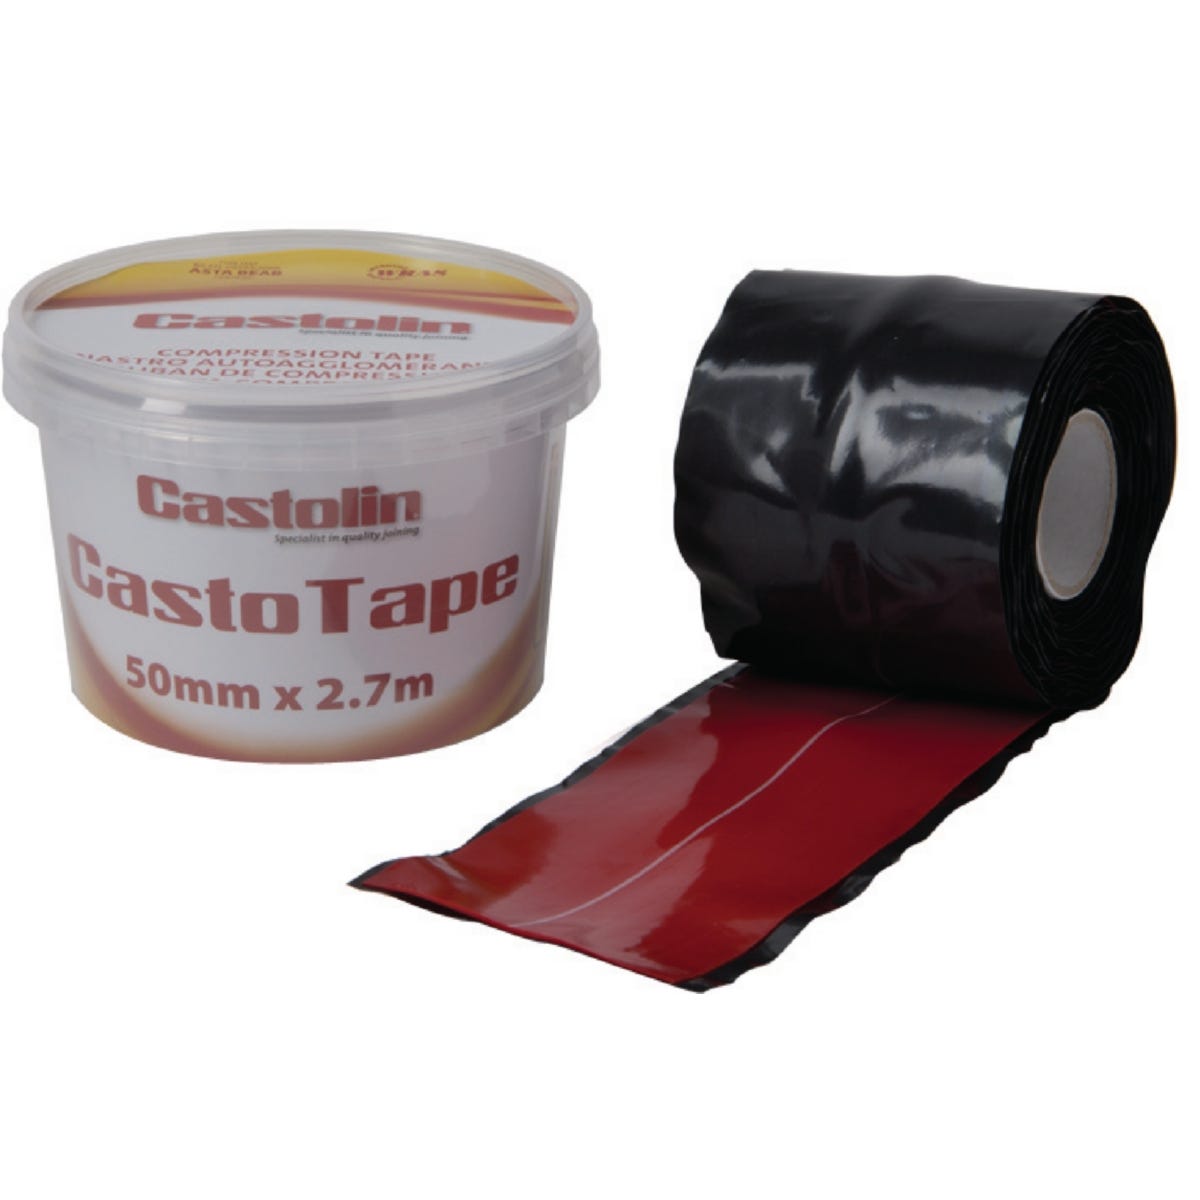 bande de compression - casto tape - coffret 2 bandes - 756540 0